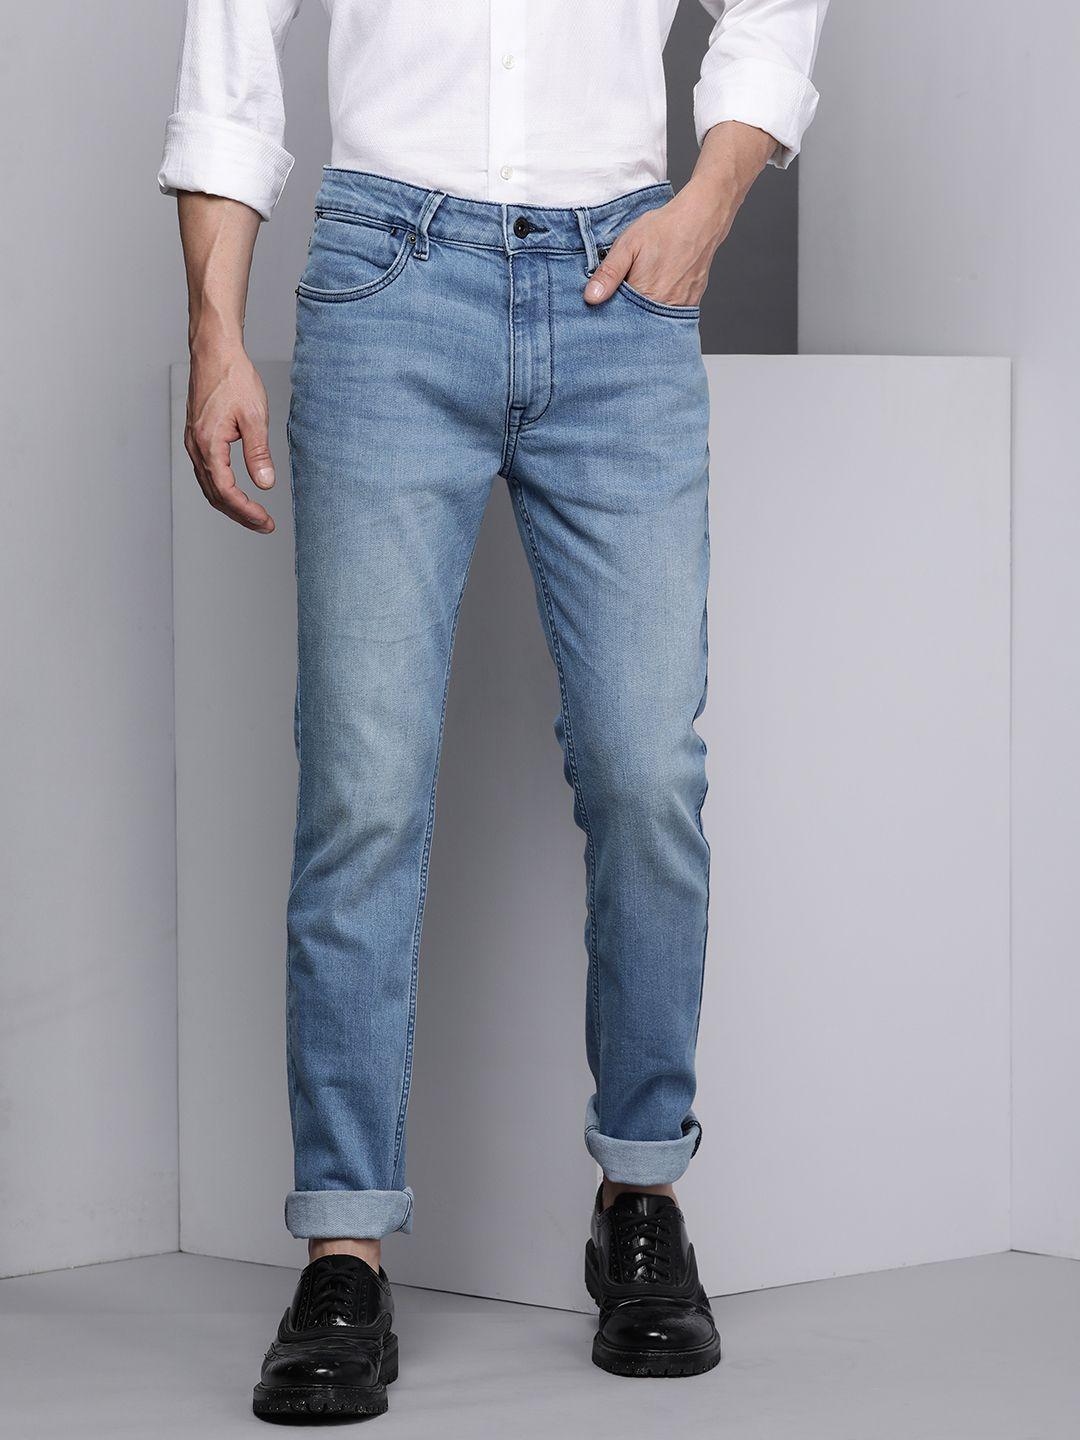 kenneth-cole-invictus-men-light-blue-light-fade-slim-fit-mid-rise-quintessential-jeans